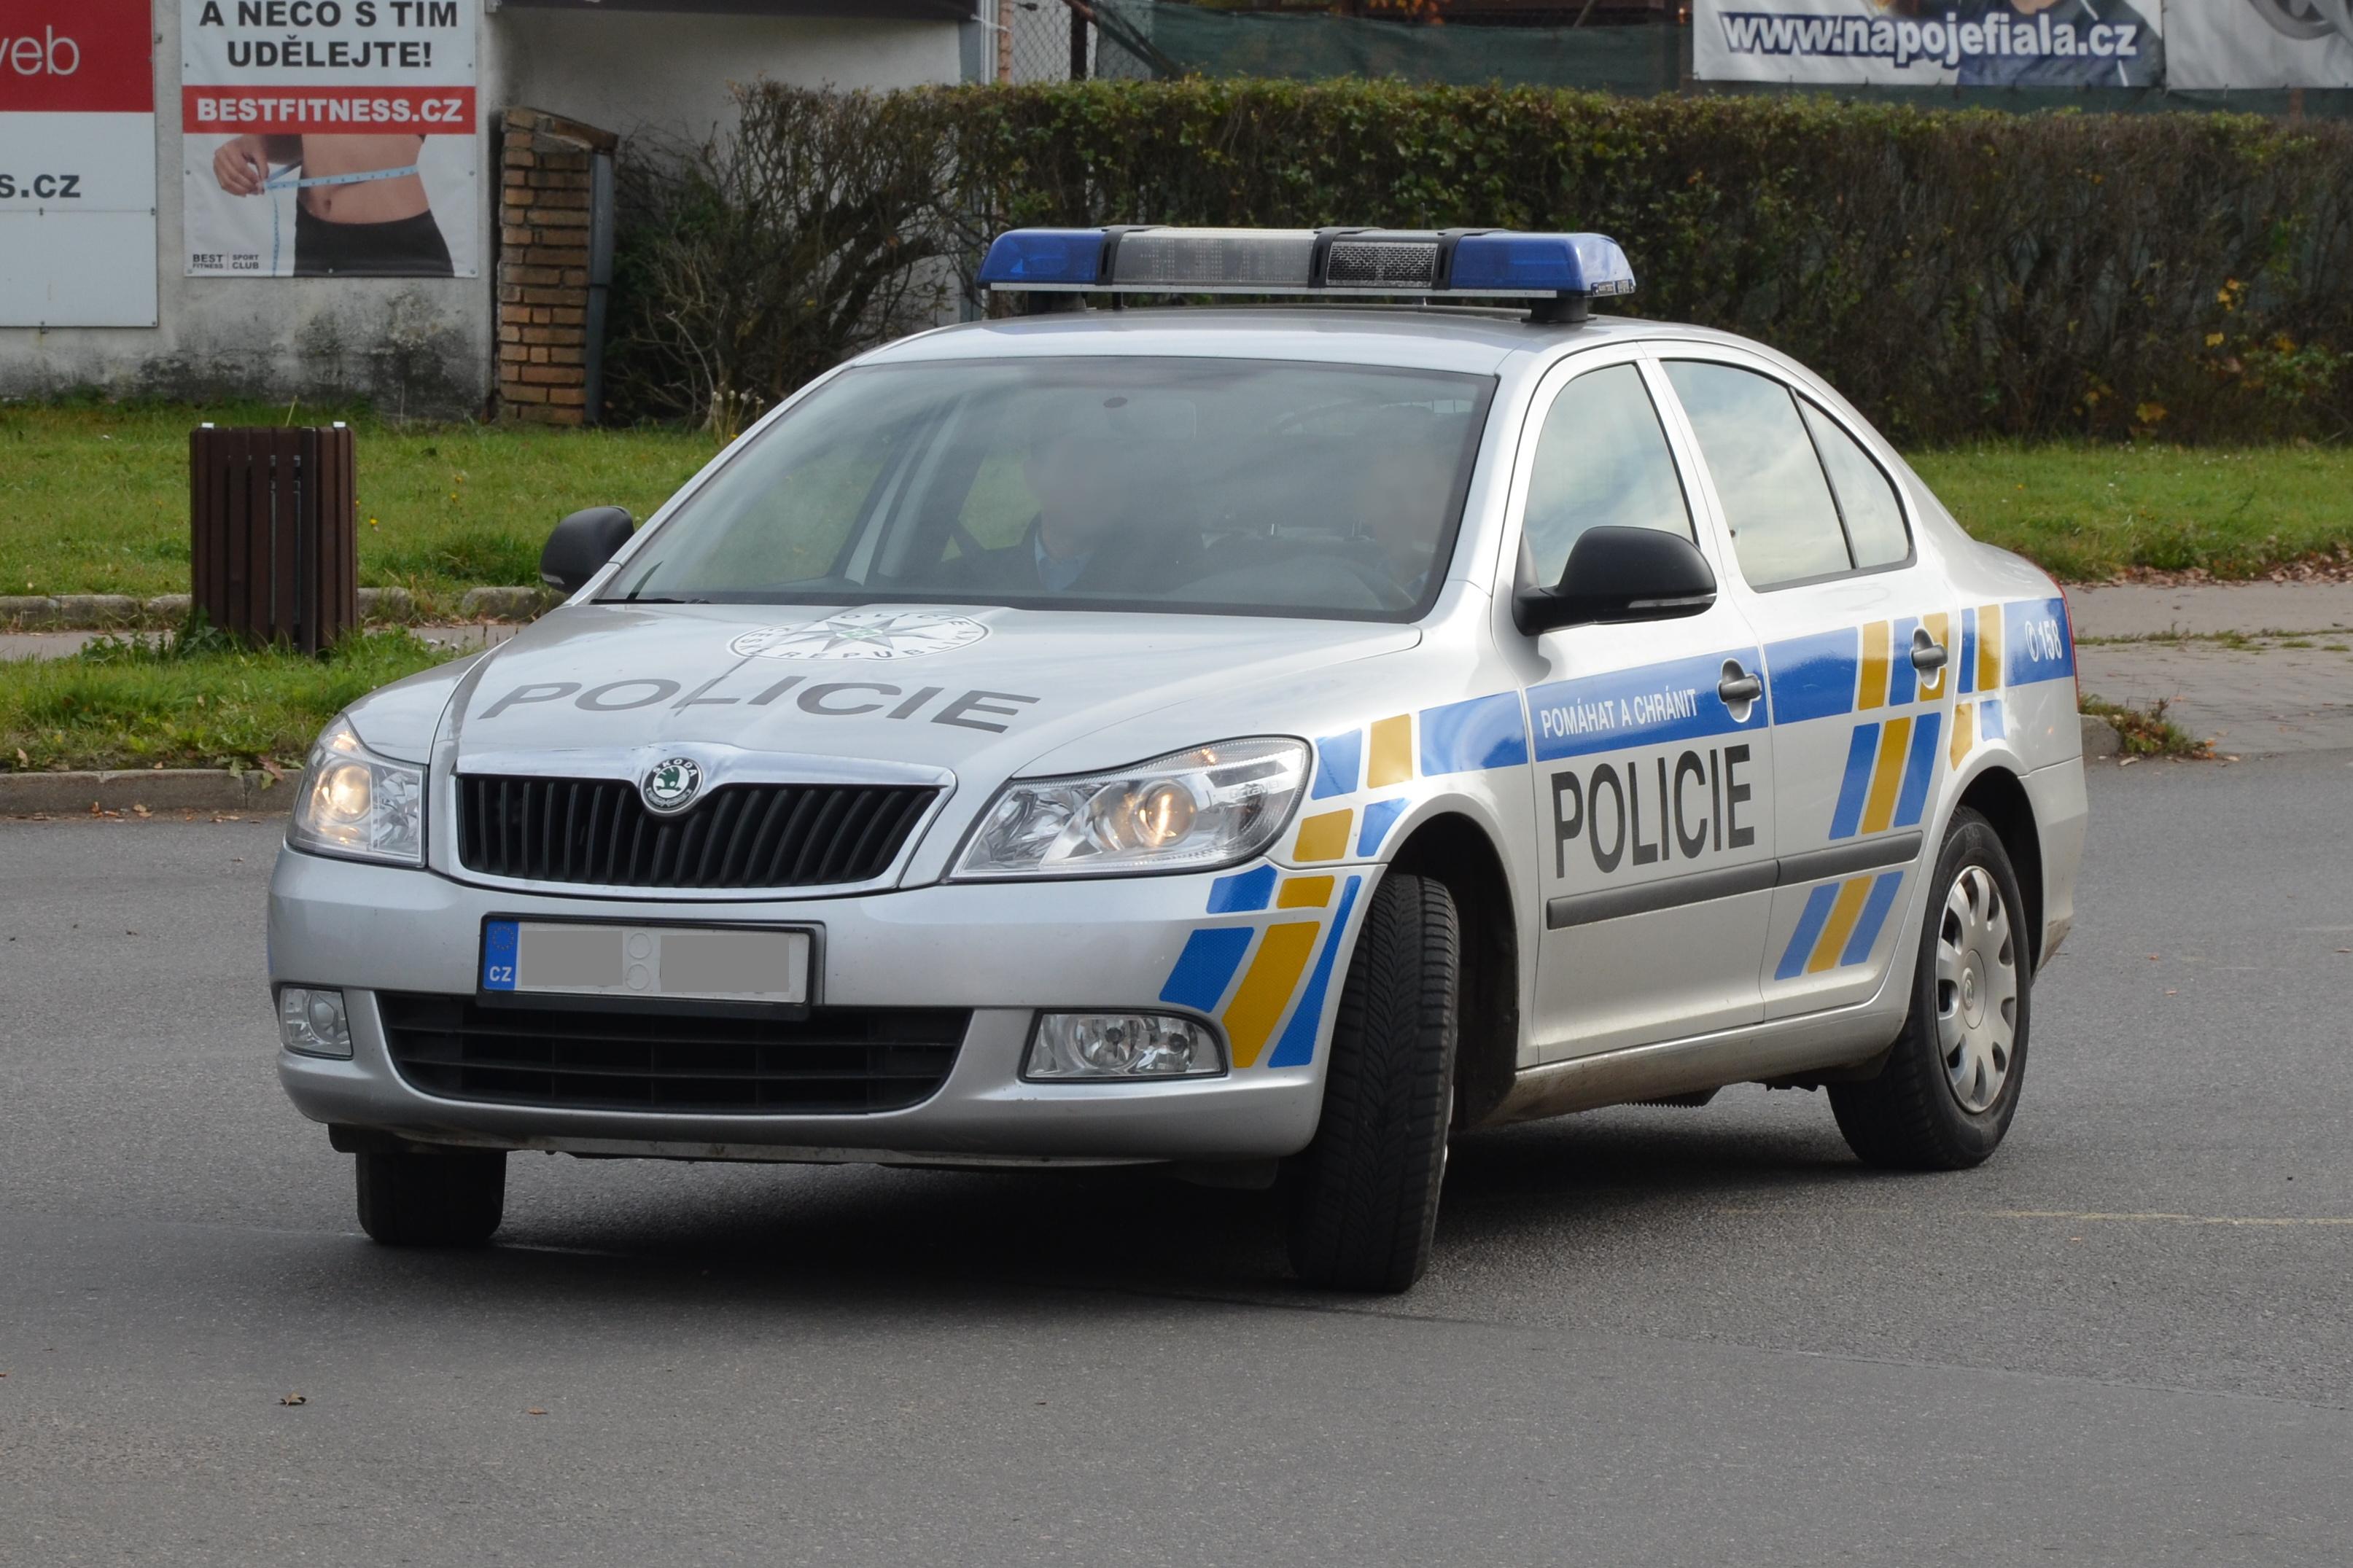 File:Skoda Octavia sedan new version, Police of the Czech Republic.jpg -  Wikimedia Commons